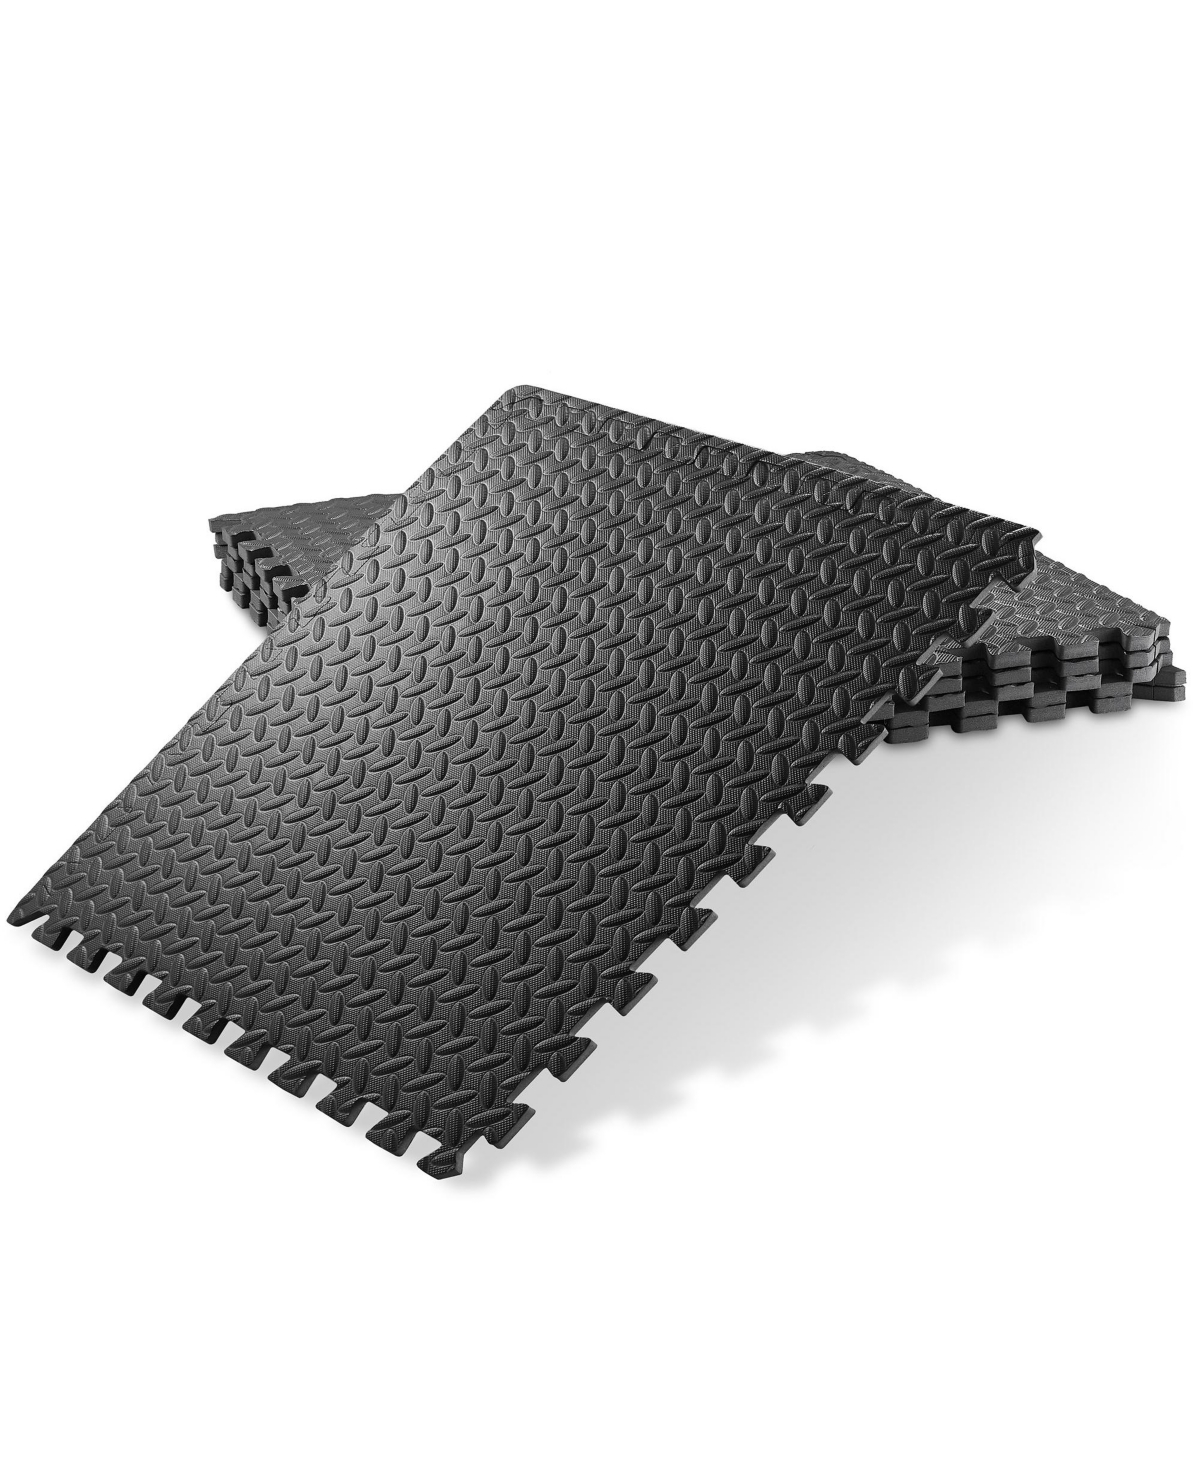 Pack of 6 Exercise Flooring Mats - 24 x 24 Inch Foam Rubber Interlocking Puzzle Floor Tiles - Black - Black